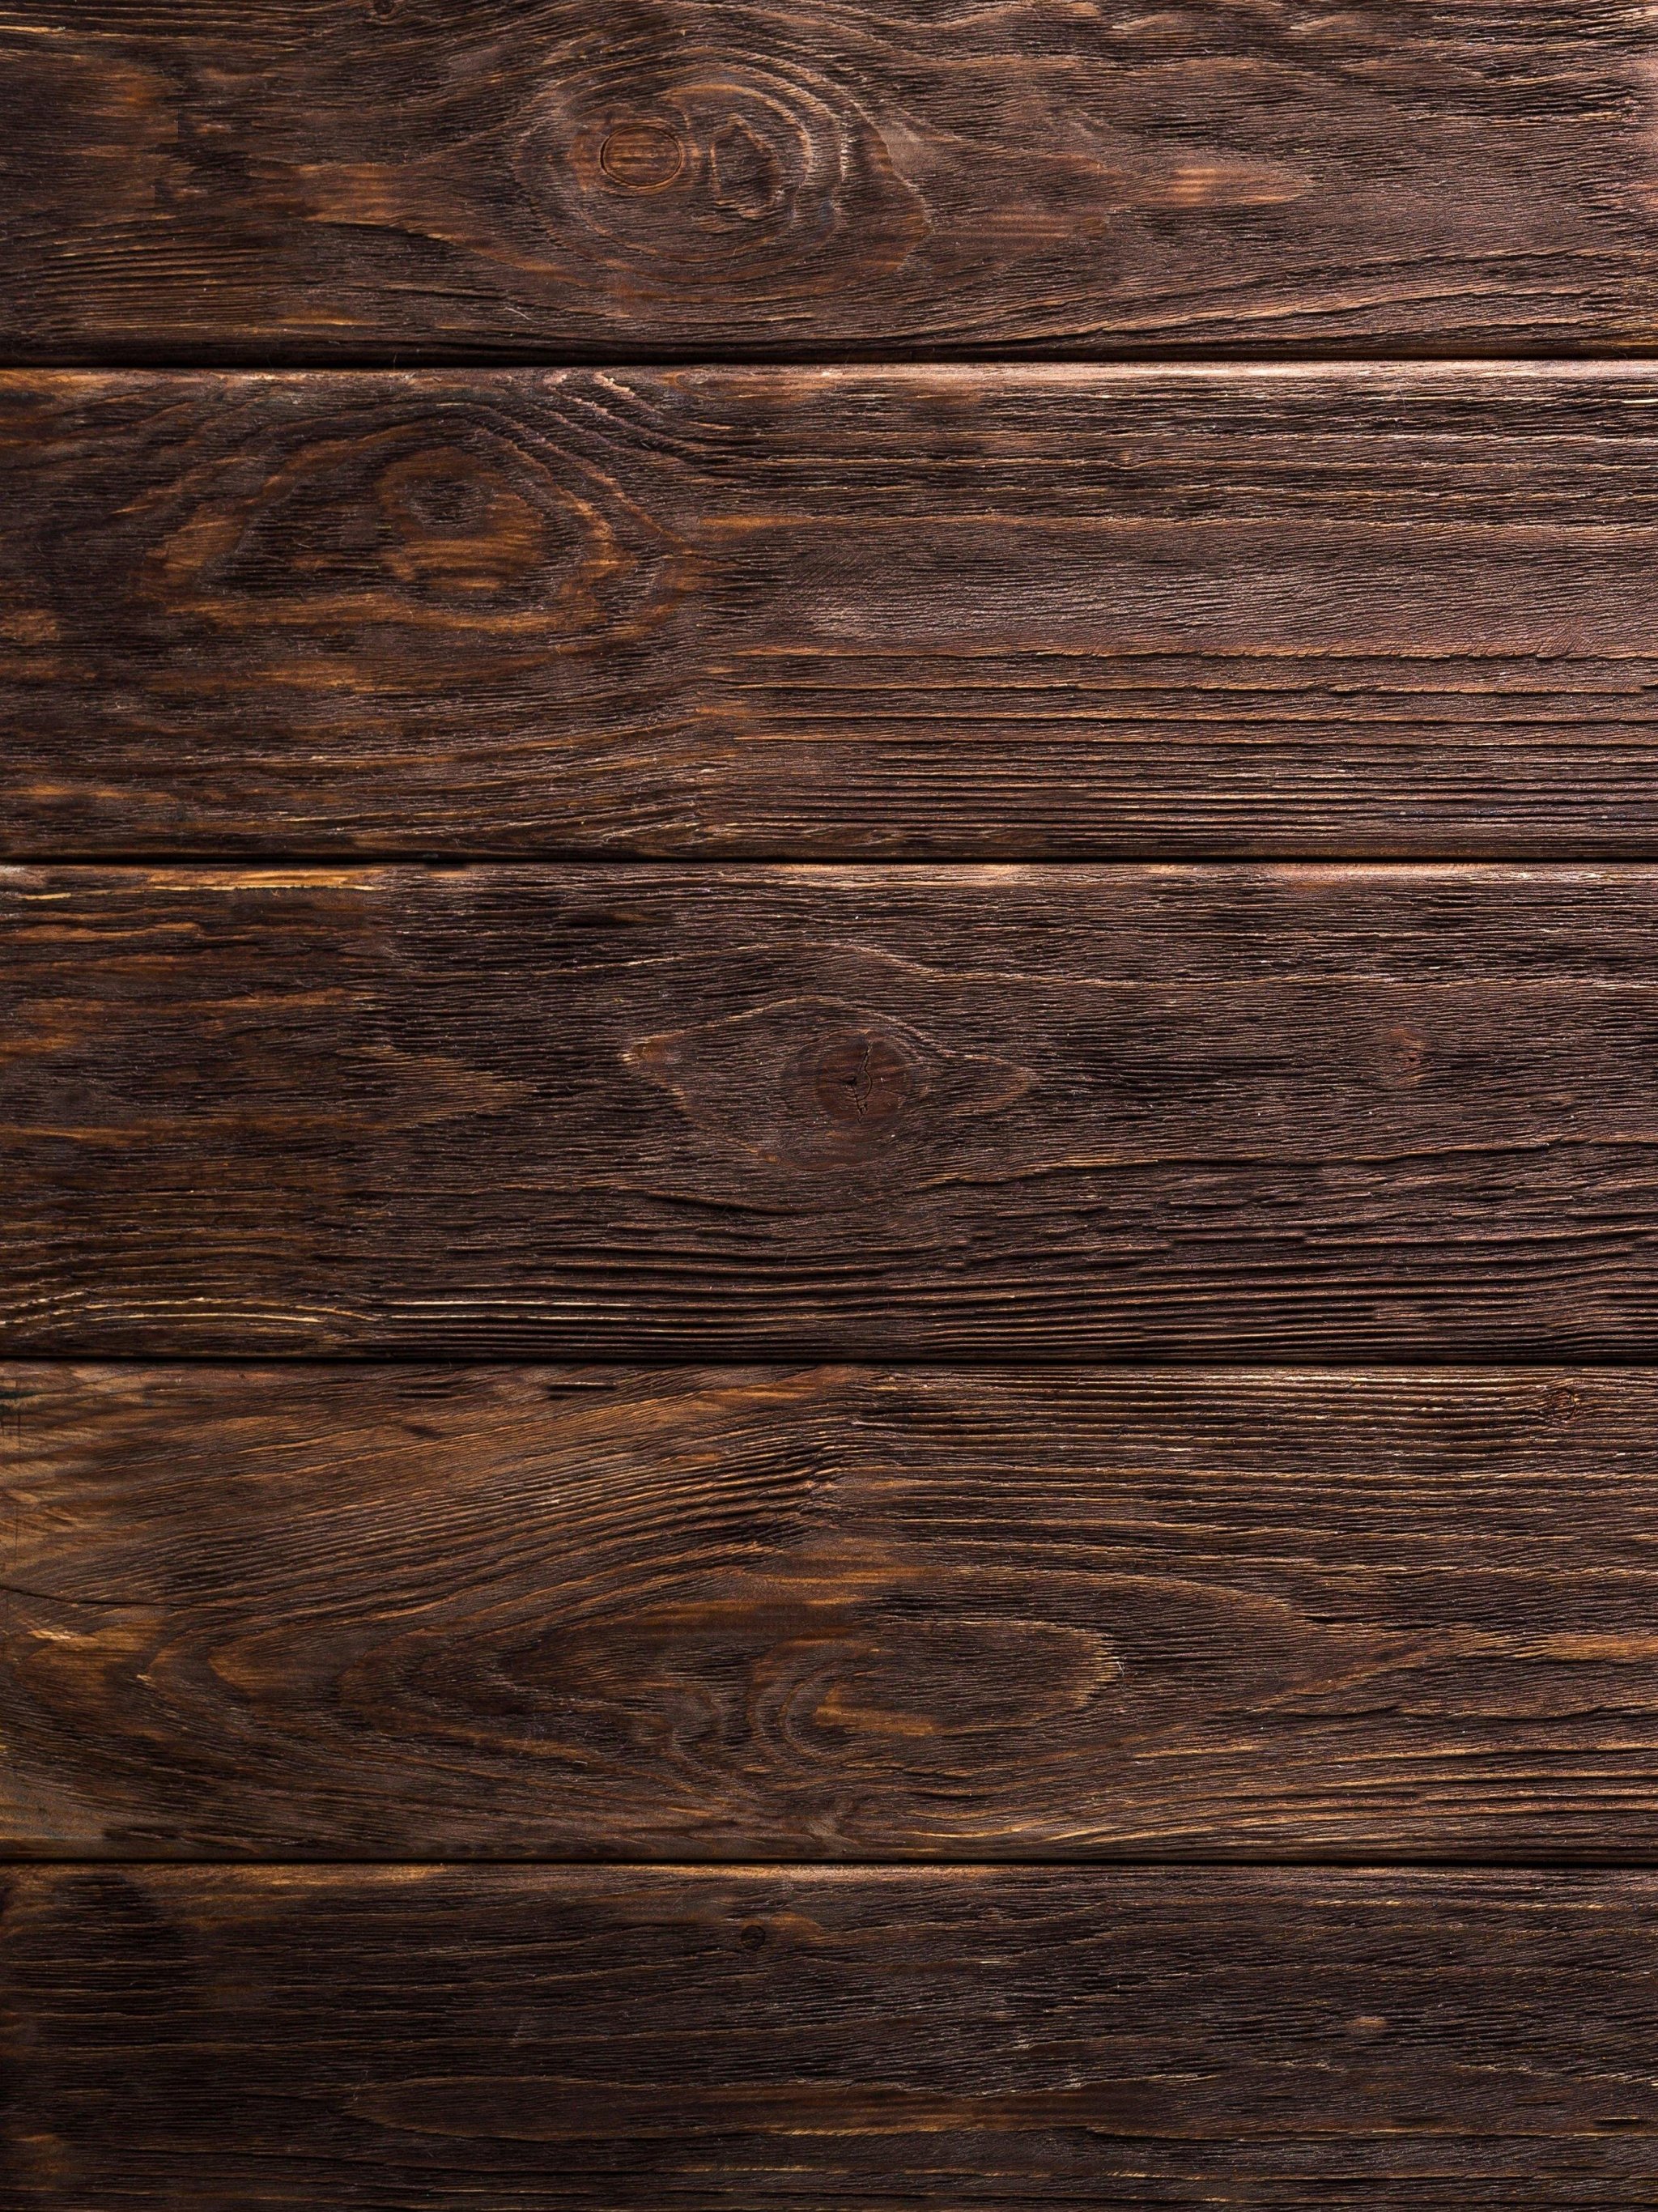 Wood Wallpaper - iPhone, Android & Desktop Backgrounds